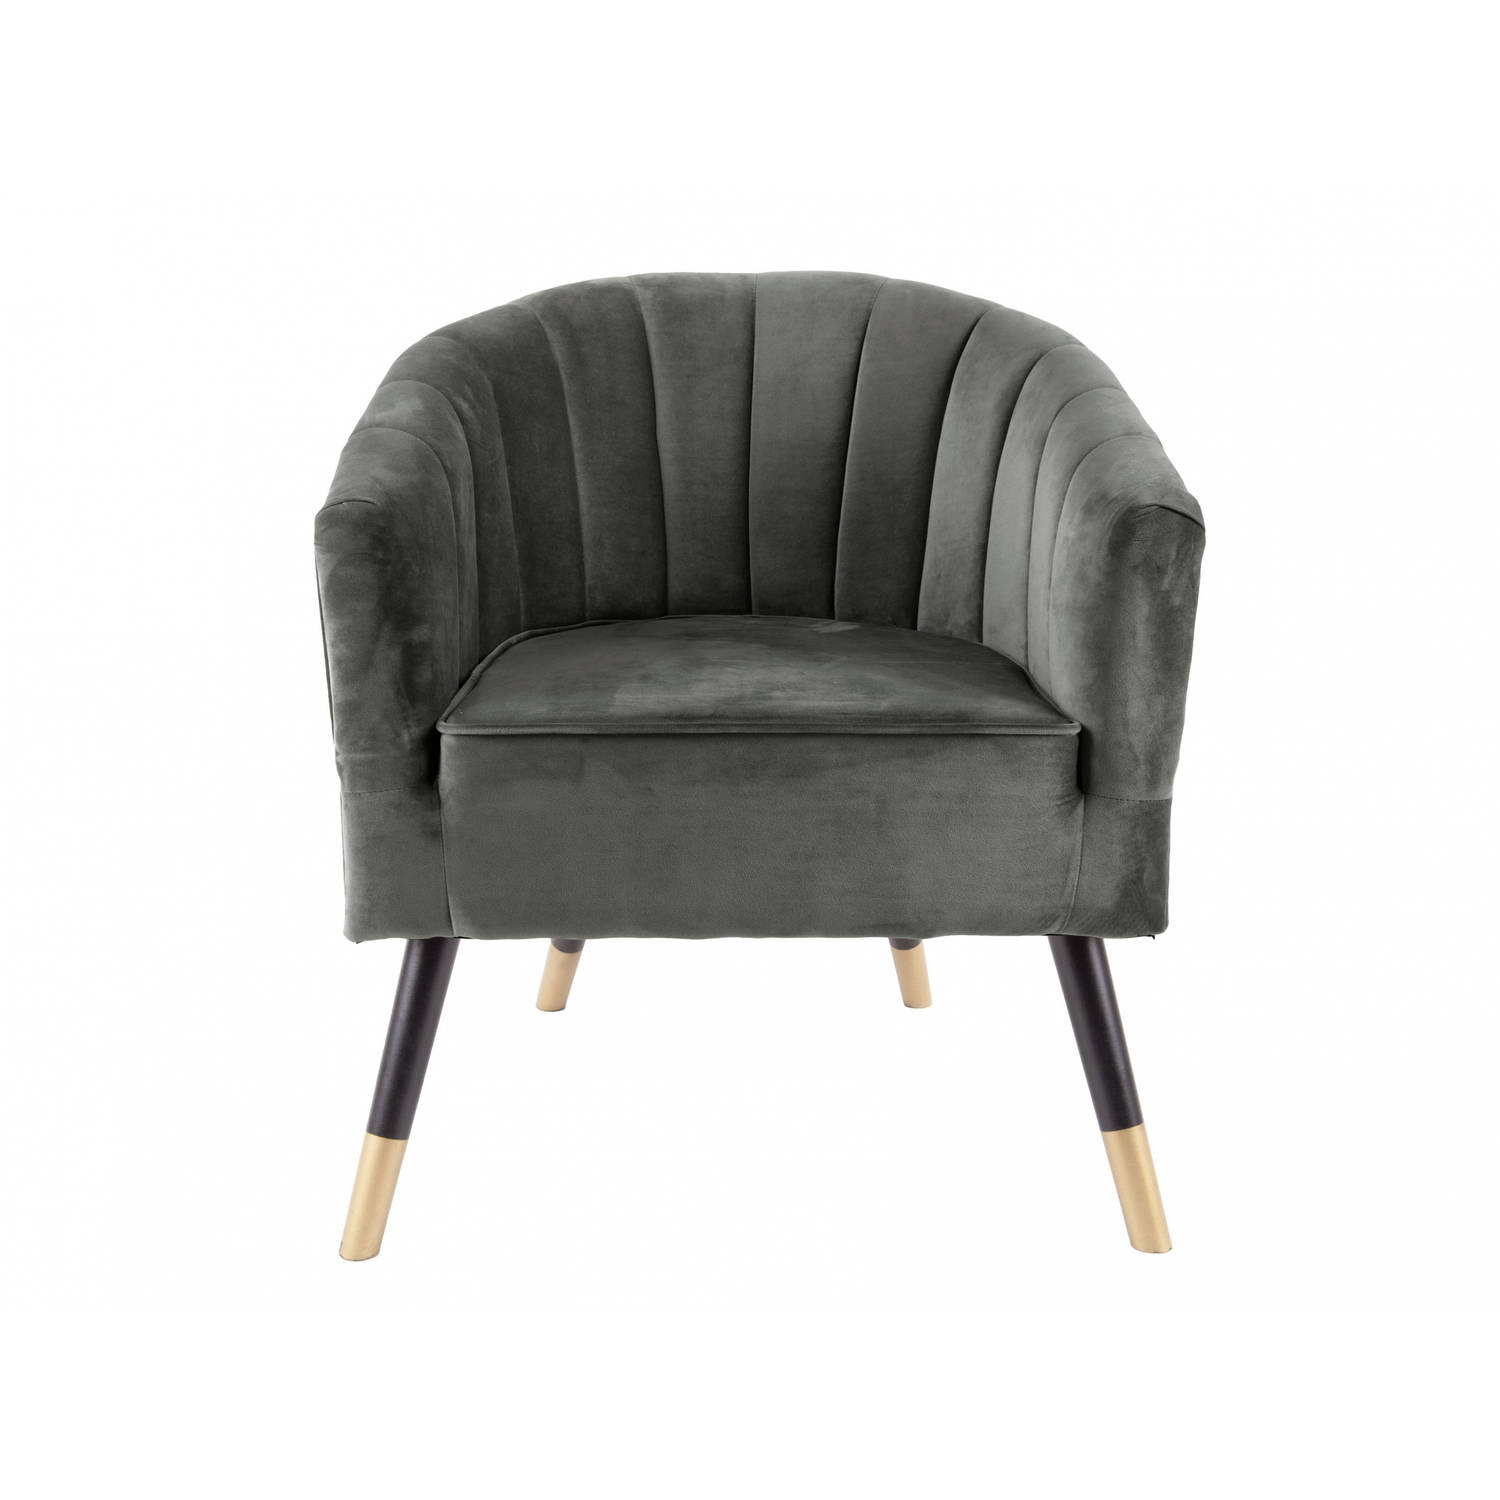 Leitmotiv fauteuil Royal 70 x 71 x 80 cm fluweel/hout taupe